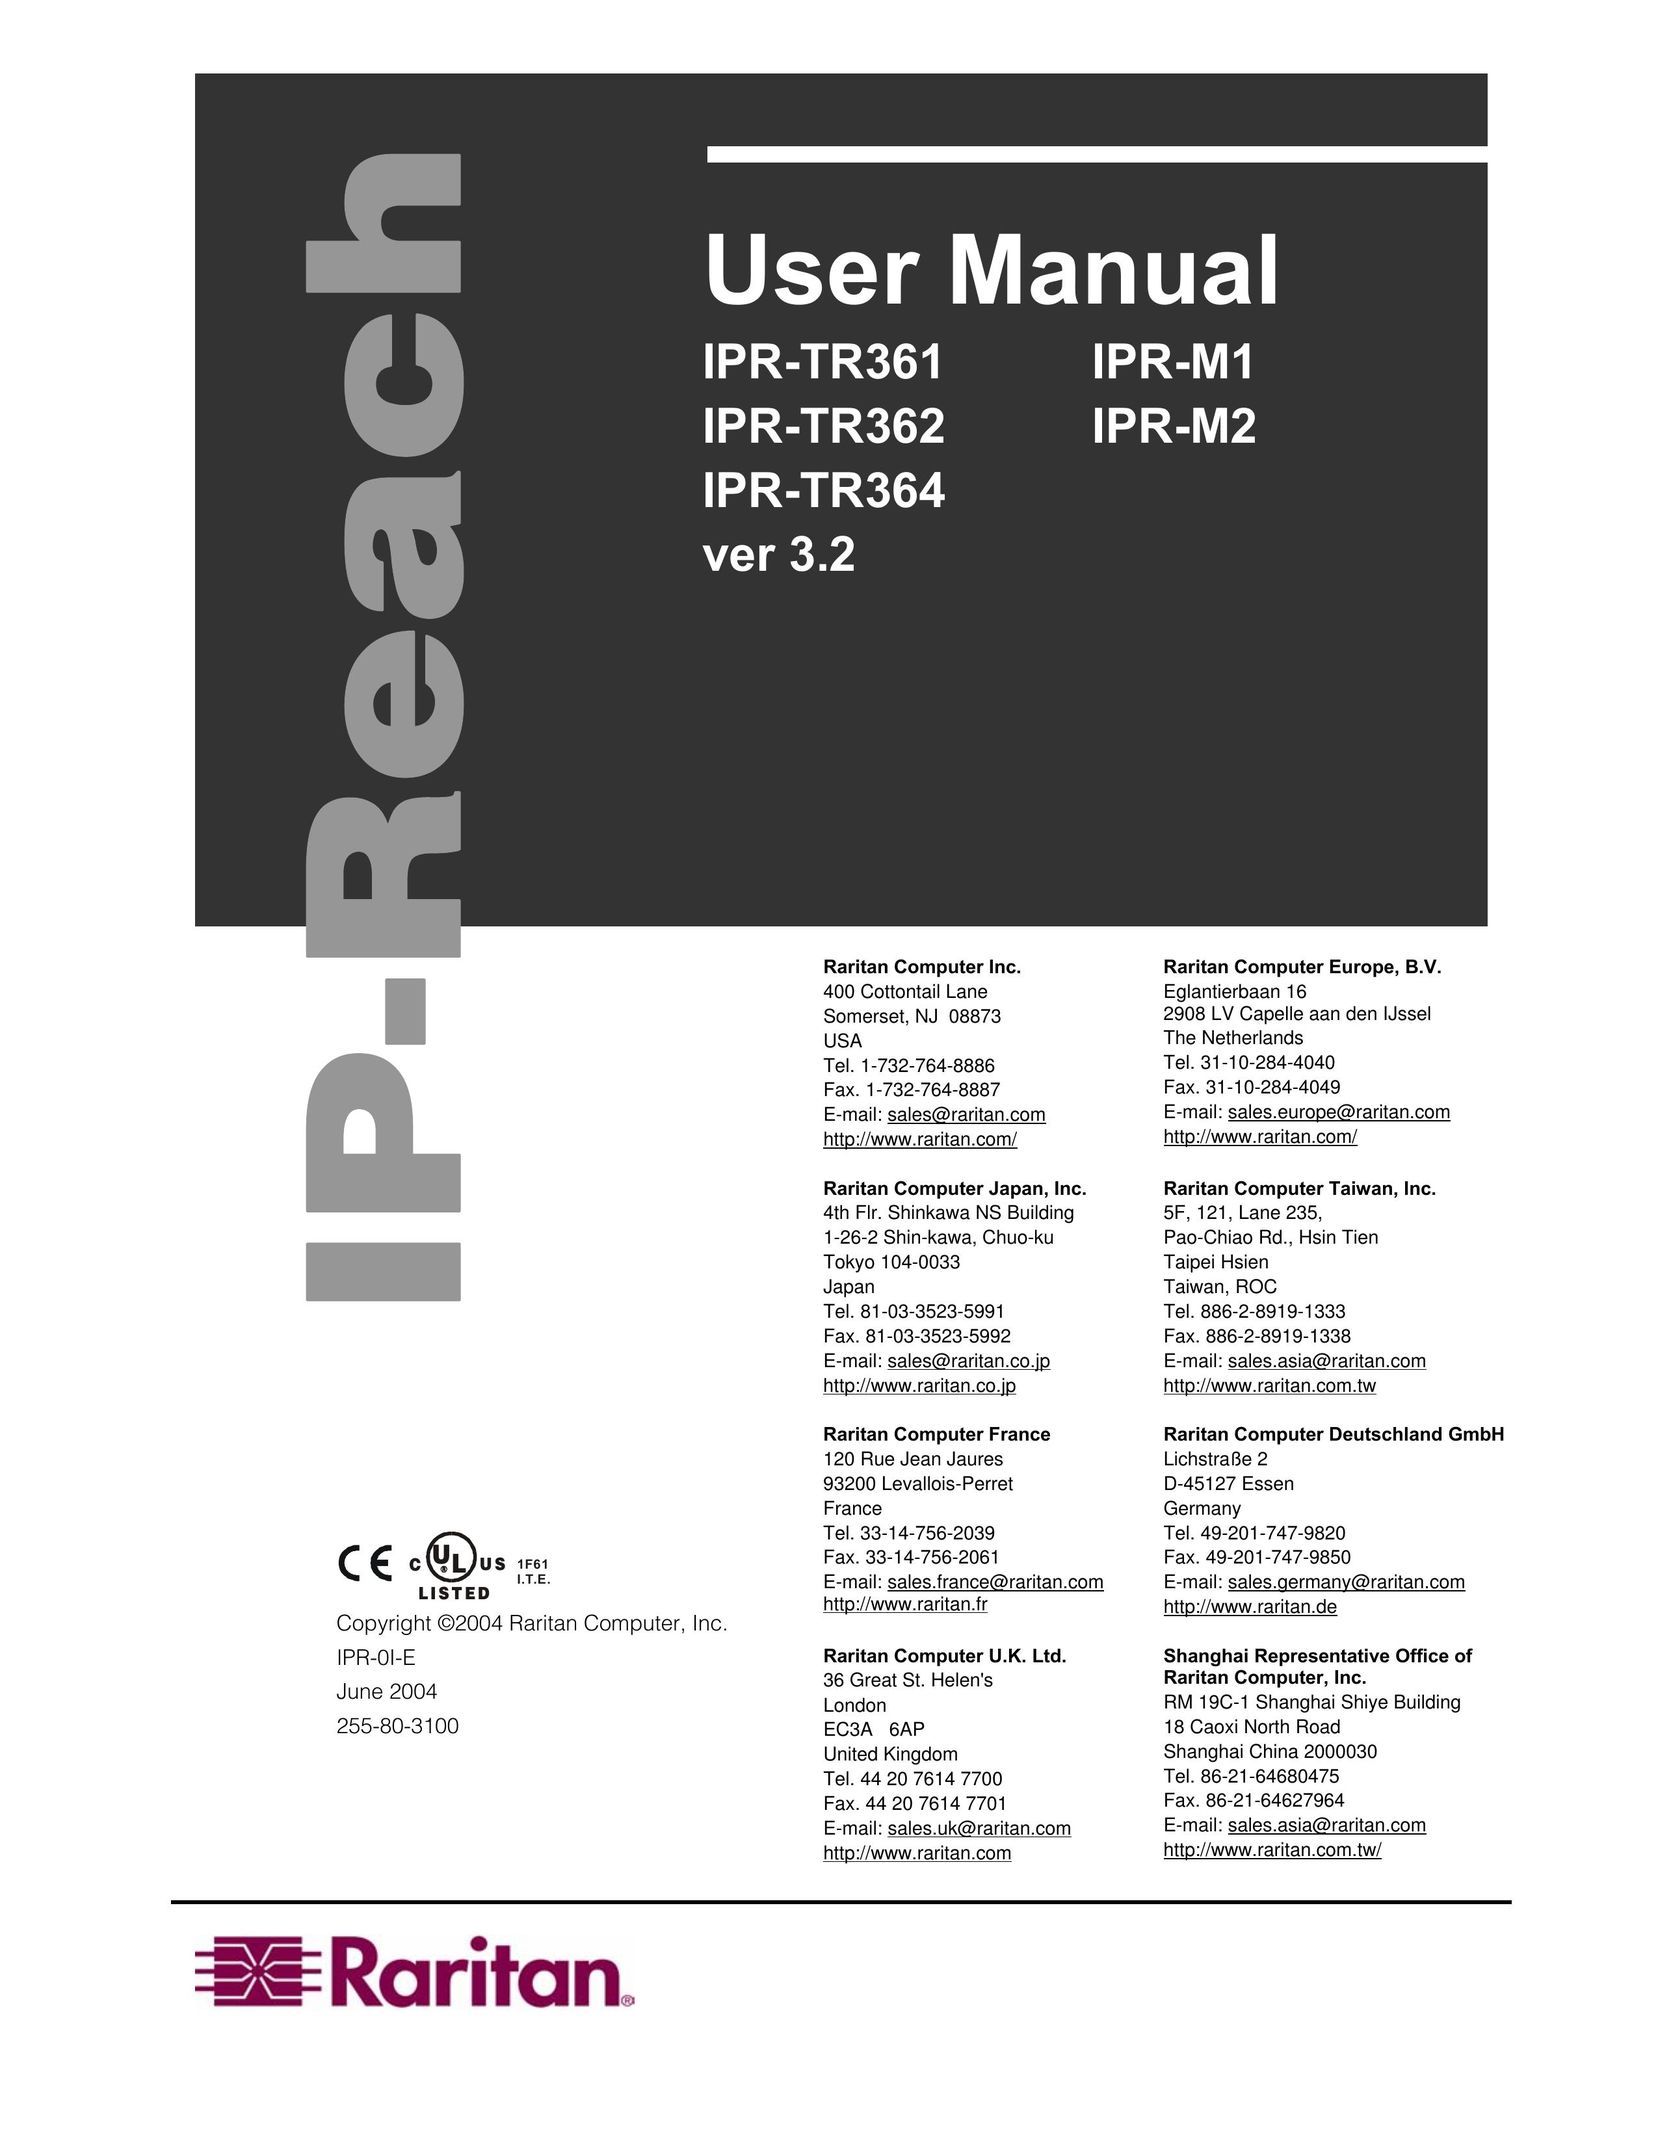 Raritan Computer IPR-TR364 Network Card User Manual